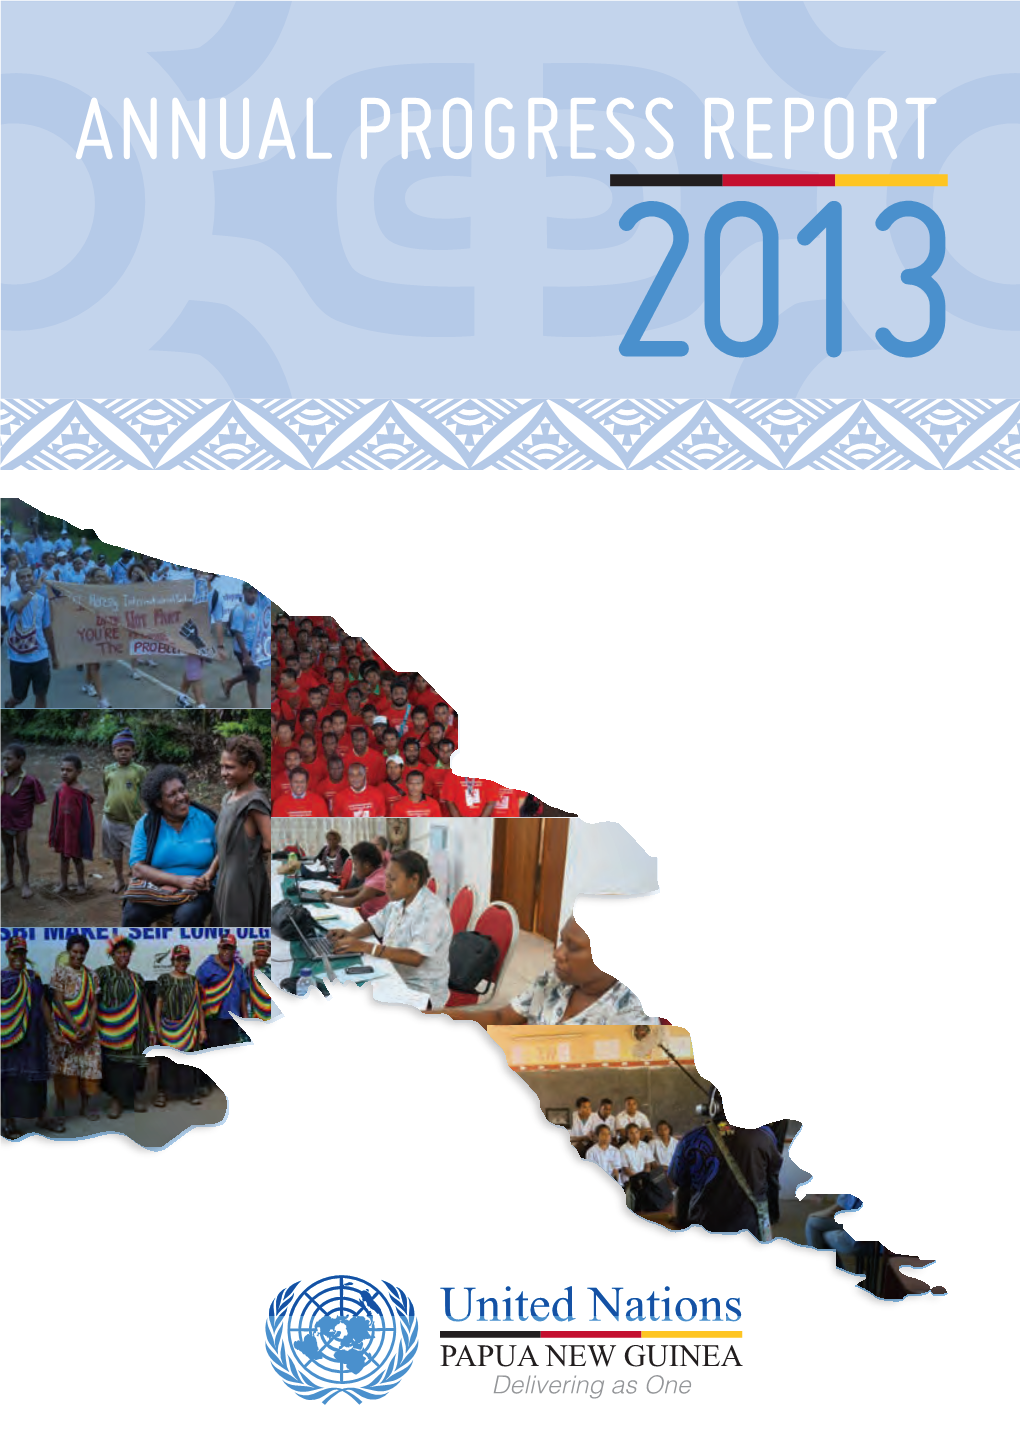 Annual Progress Report 2013 Contact Details